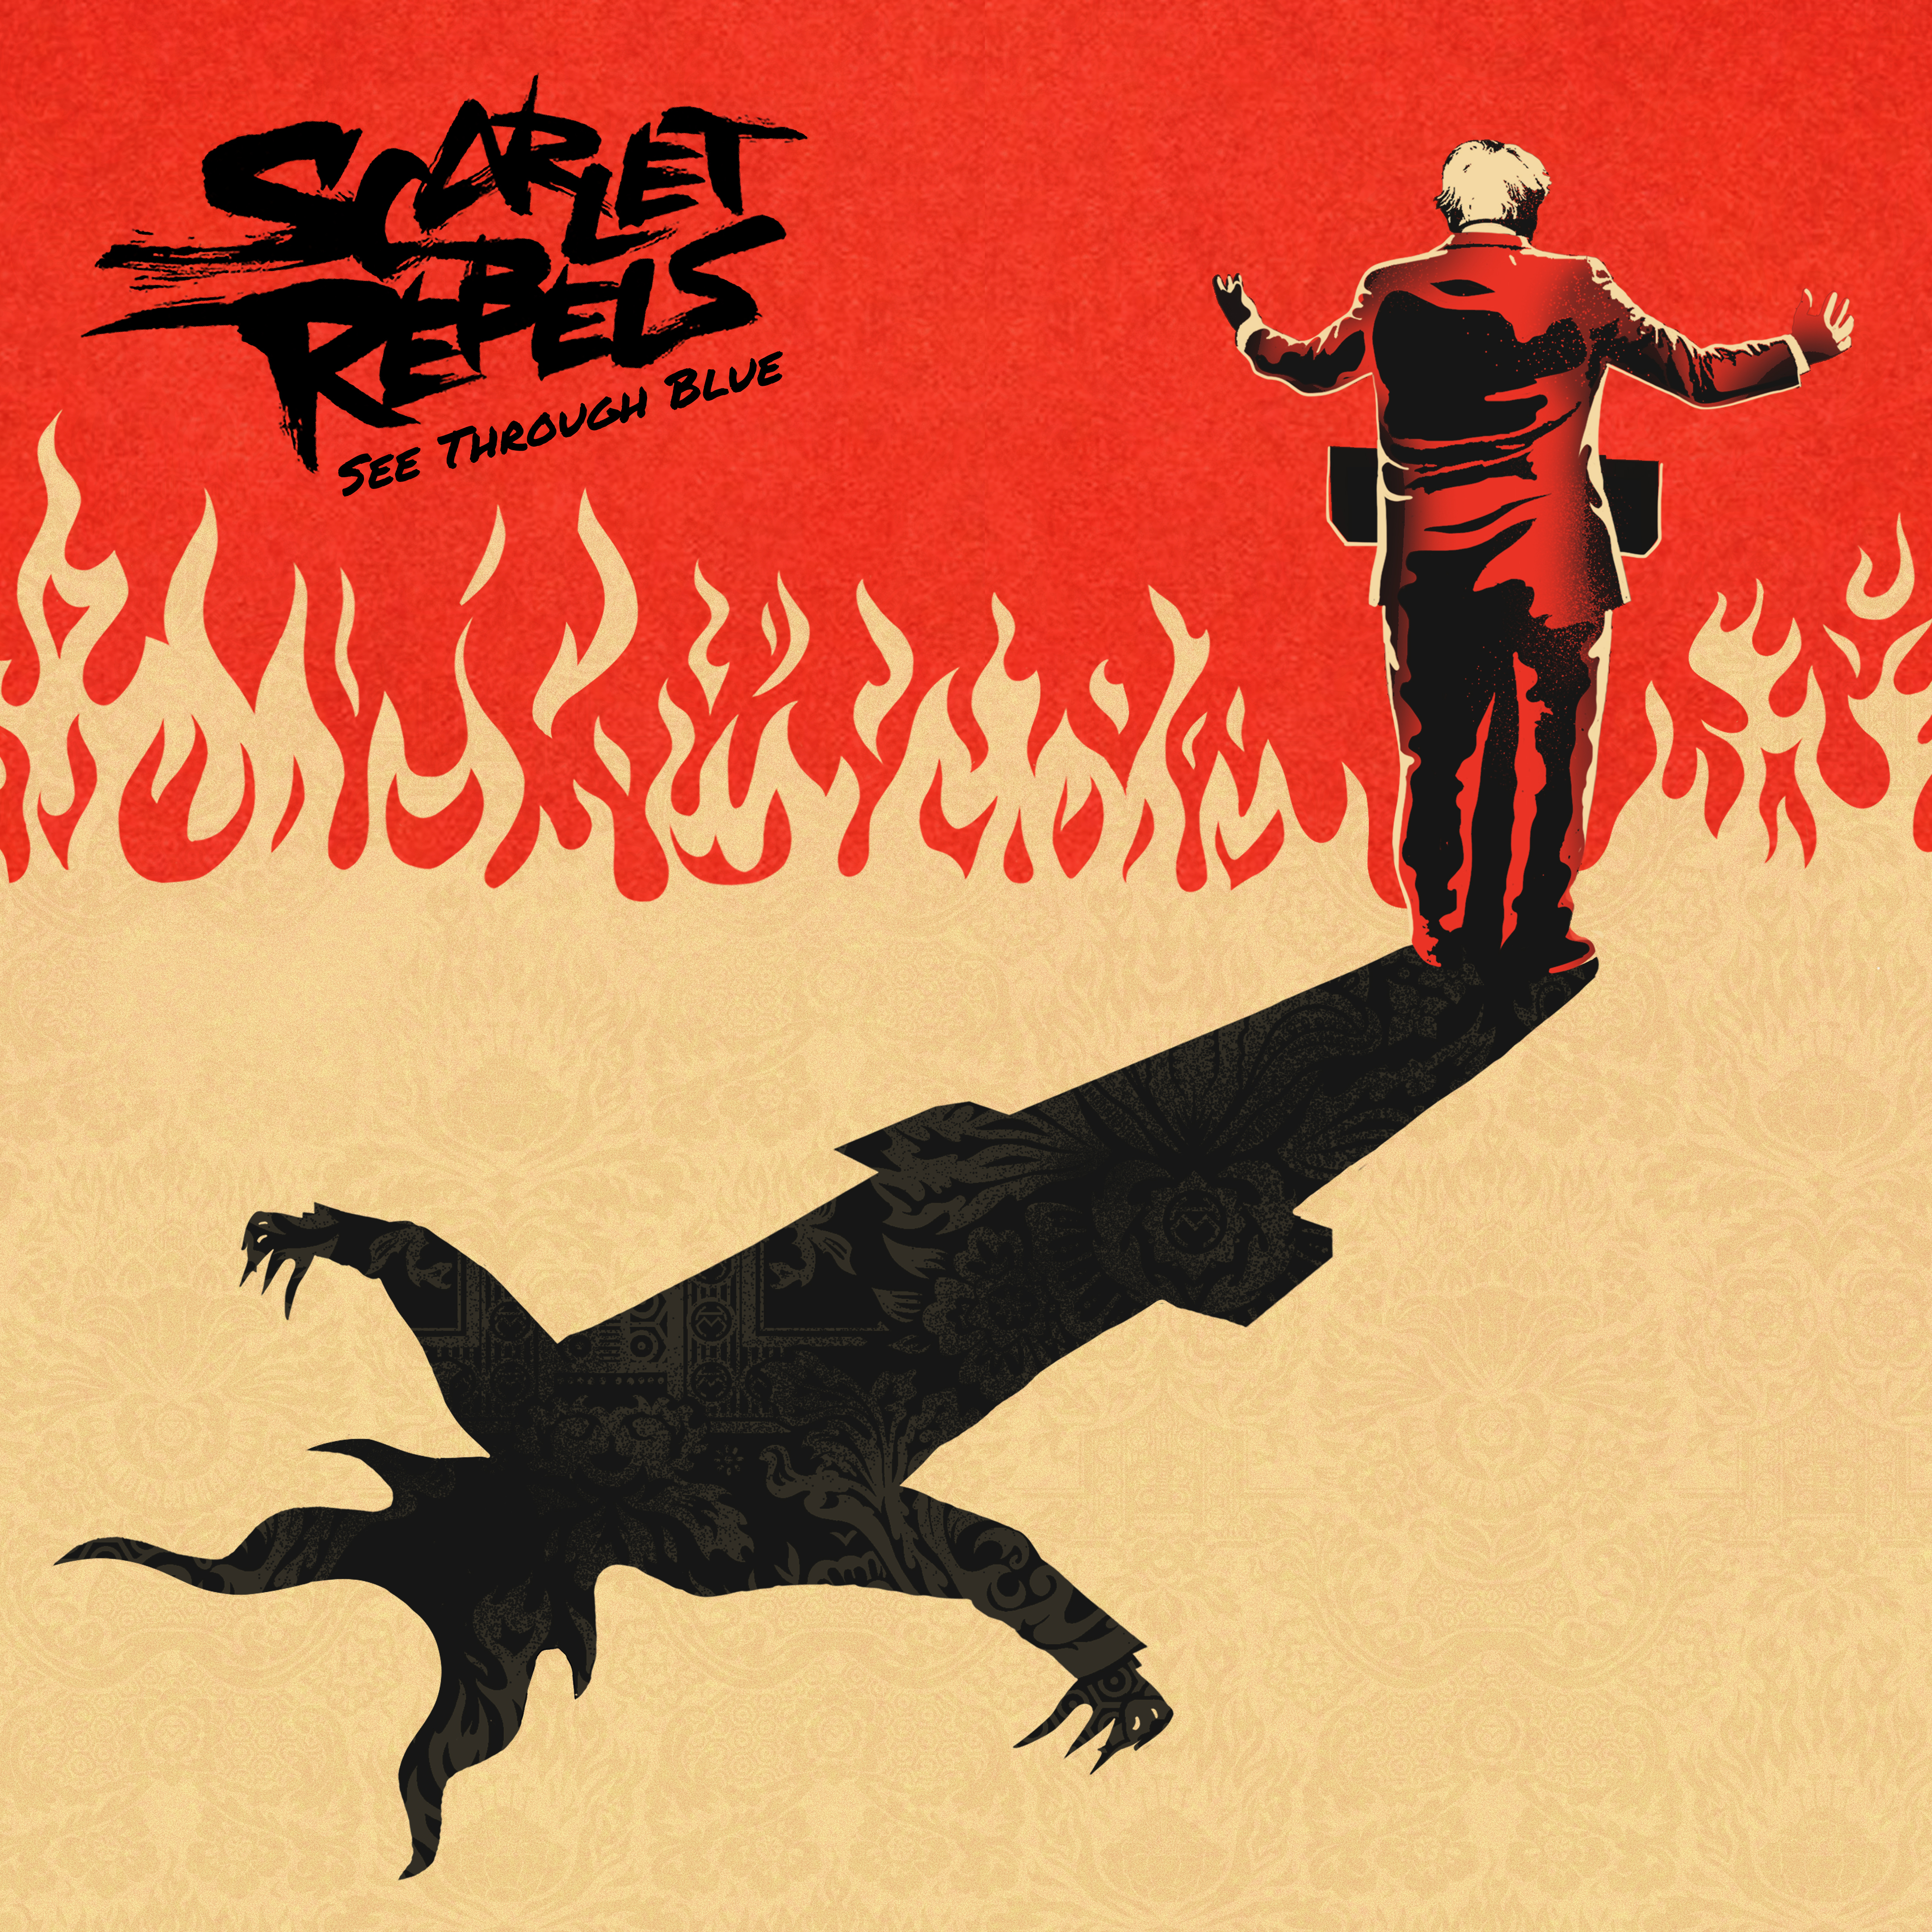 Scarlet Rebels See Through Blue (CD) Album Digipak (UK IMPORT) - Picture 1 of 1